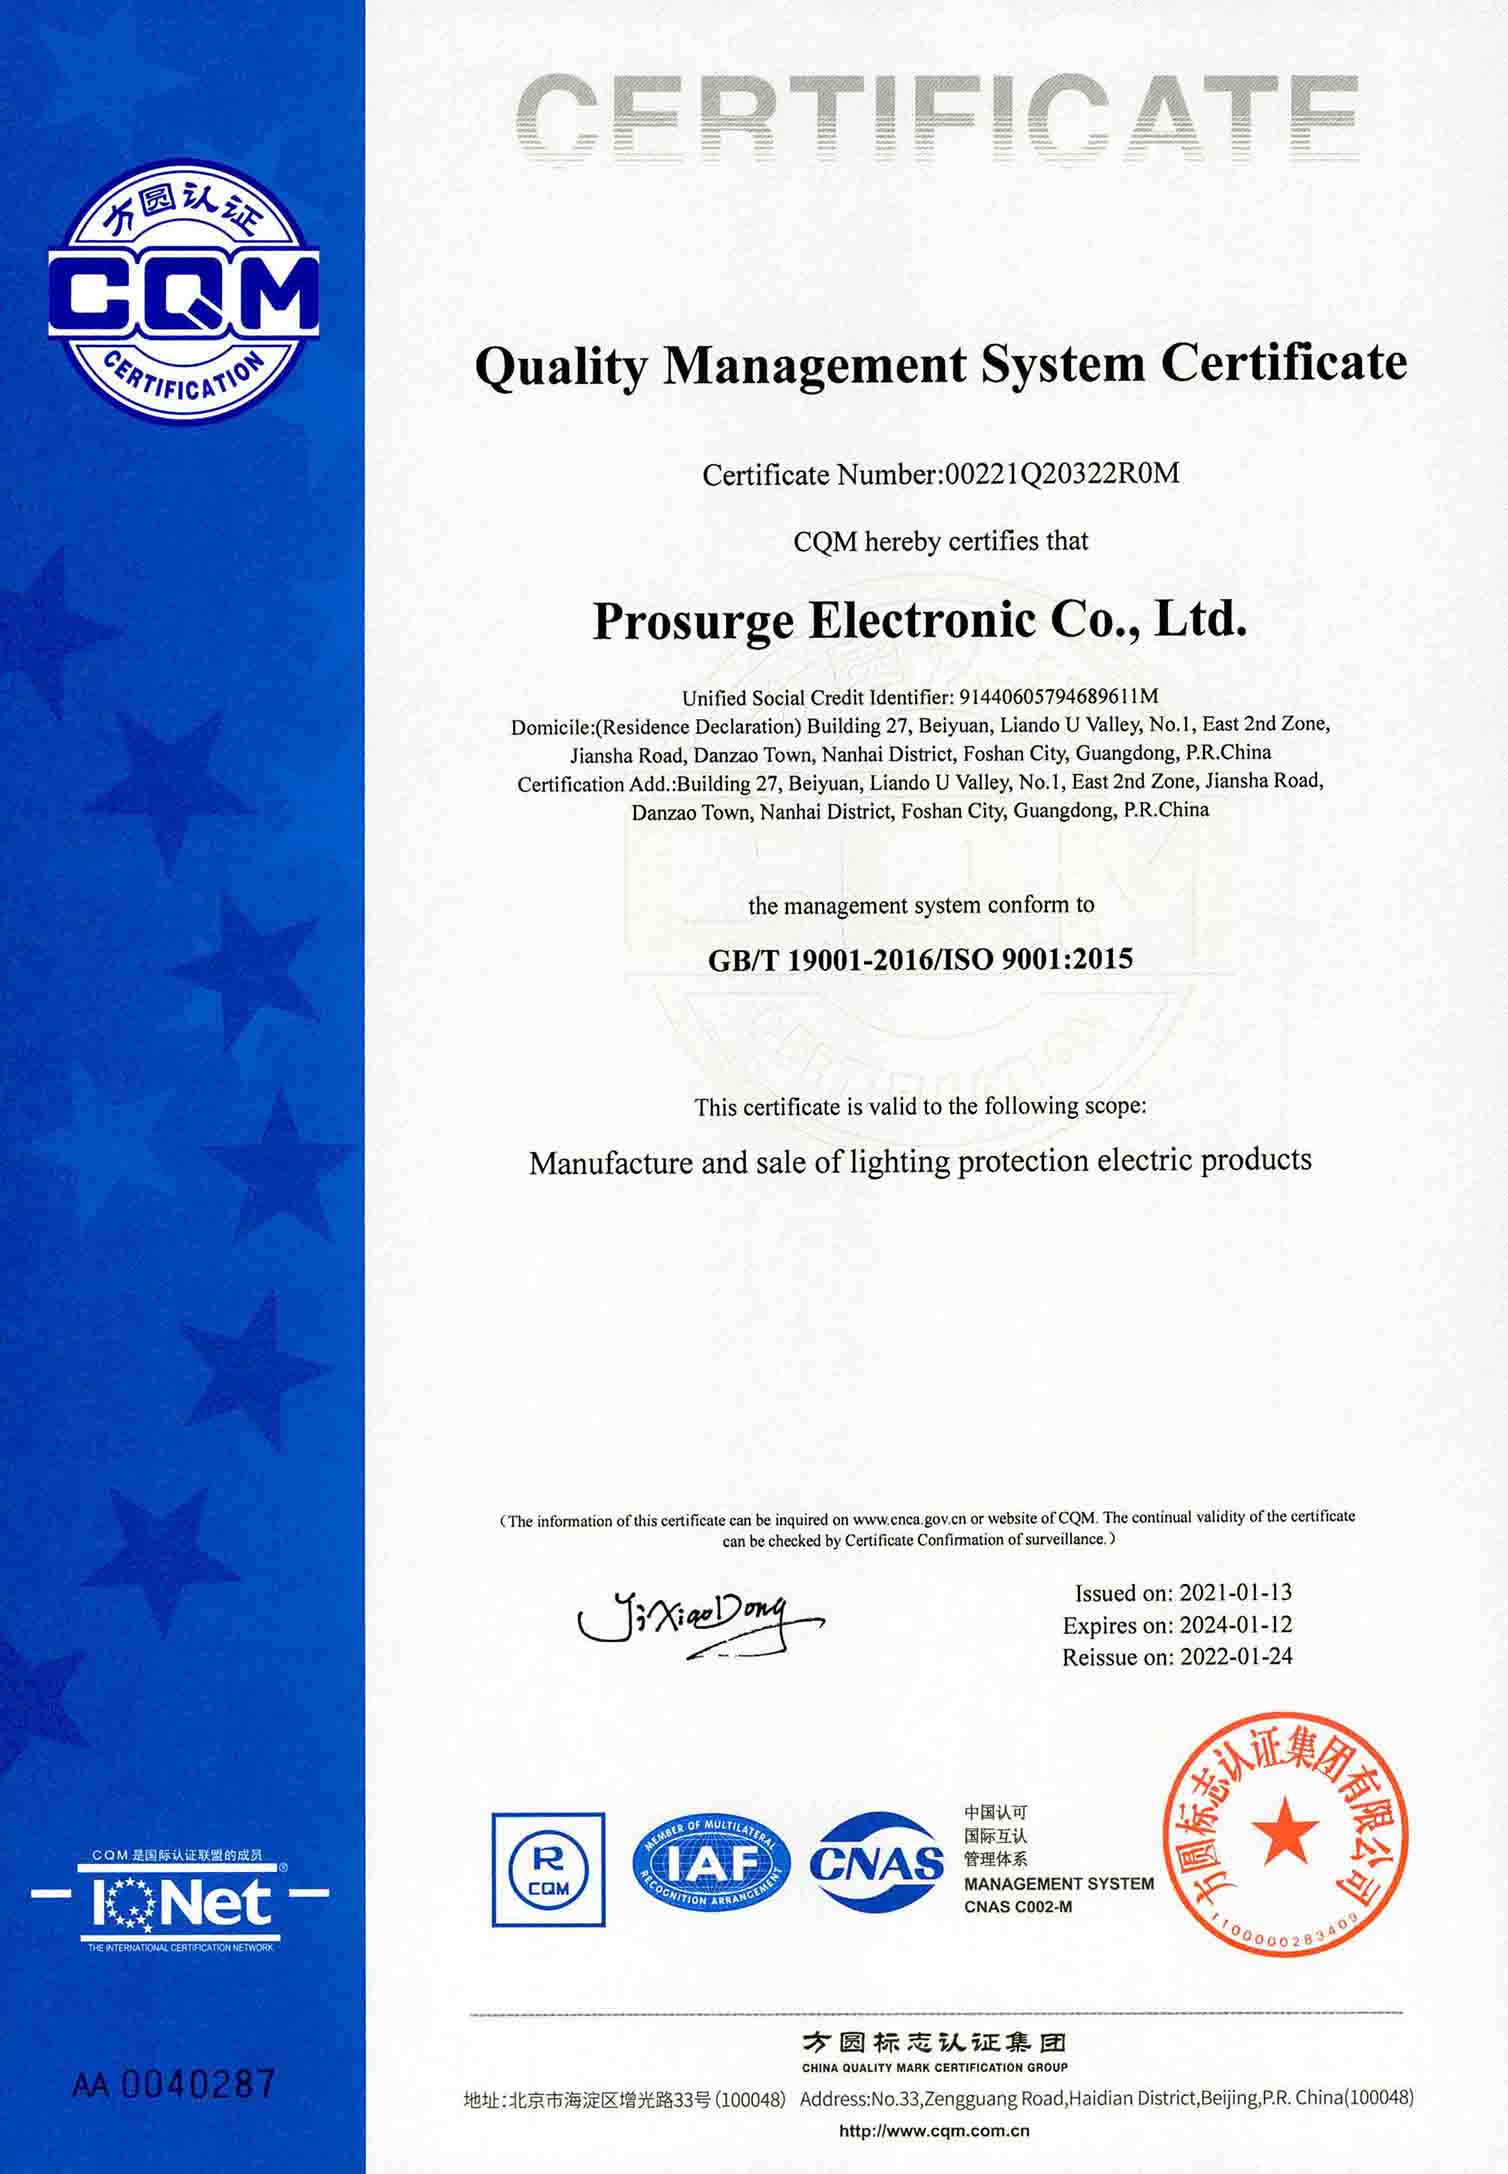 Prosurge เป็นบริษัทที่ได้รับการรับรองมาตรฐาน ISO9001